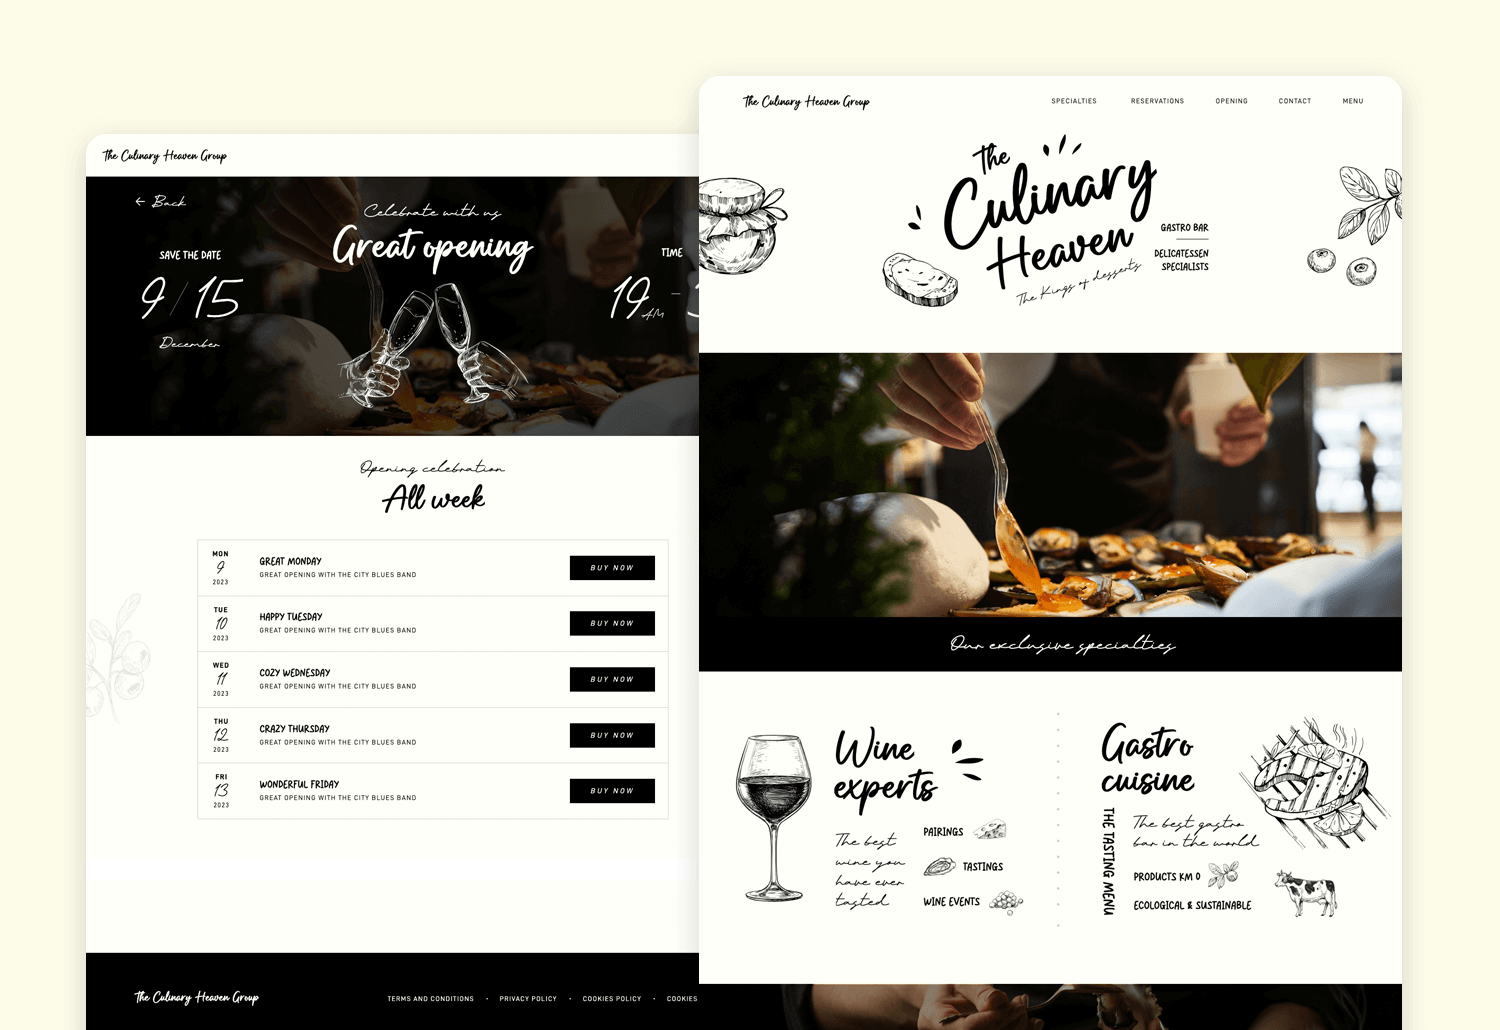 website mockup examples - restaurant